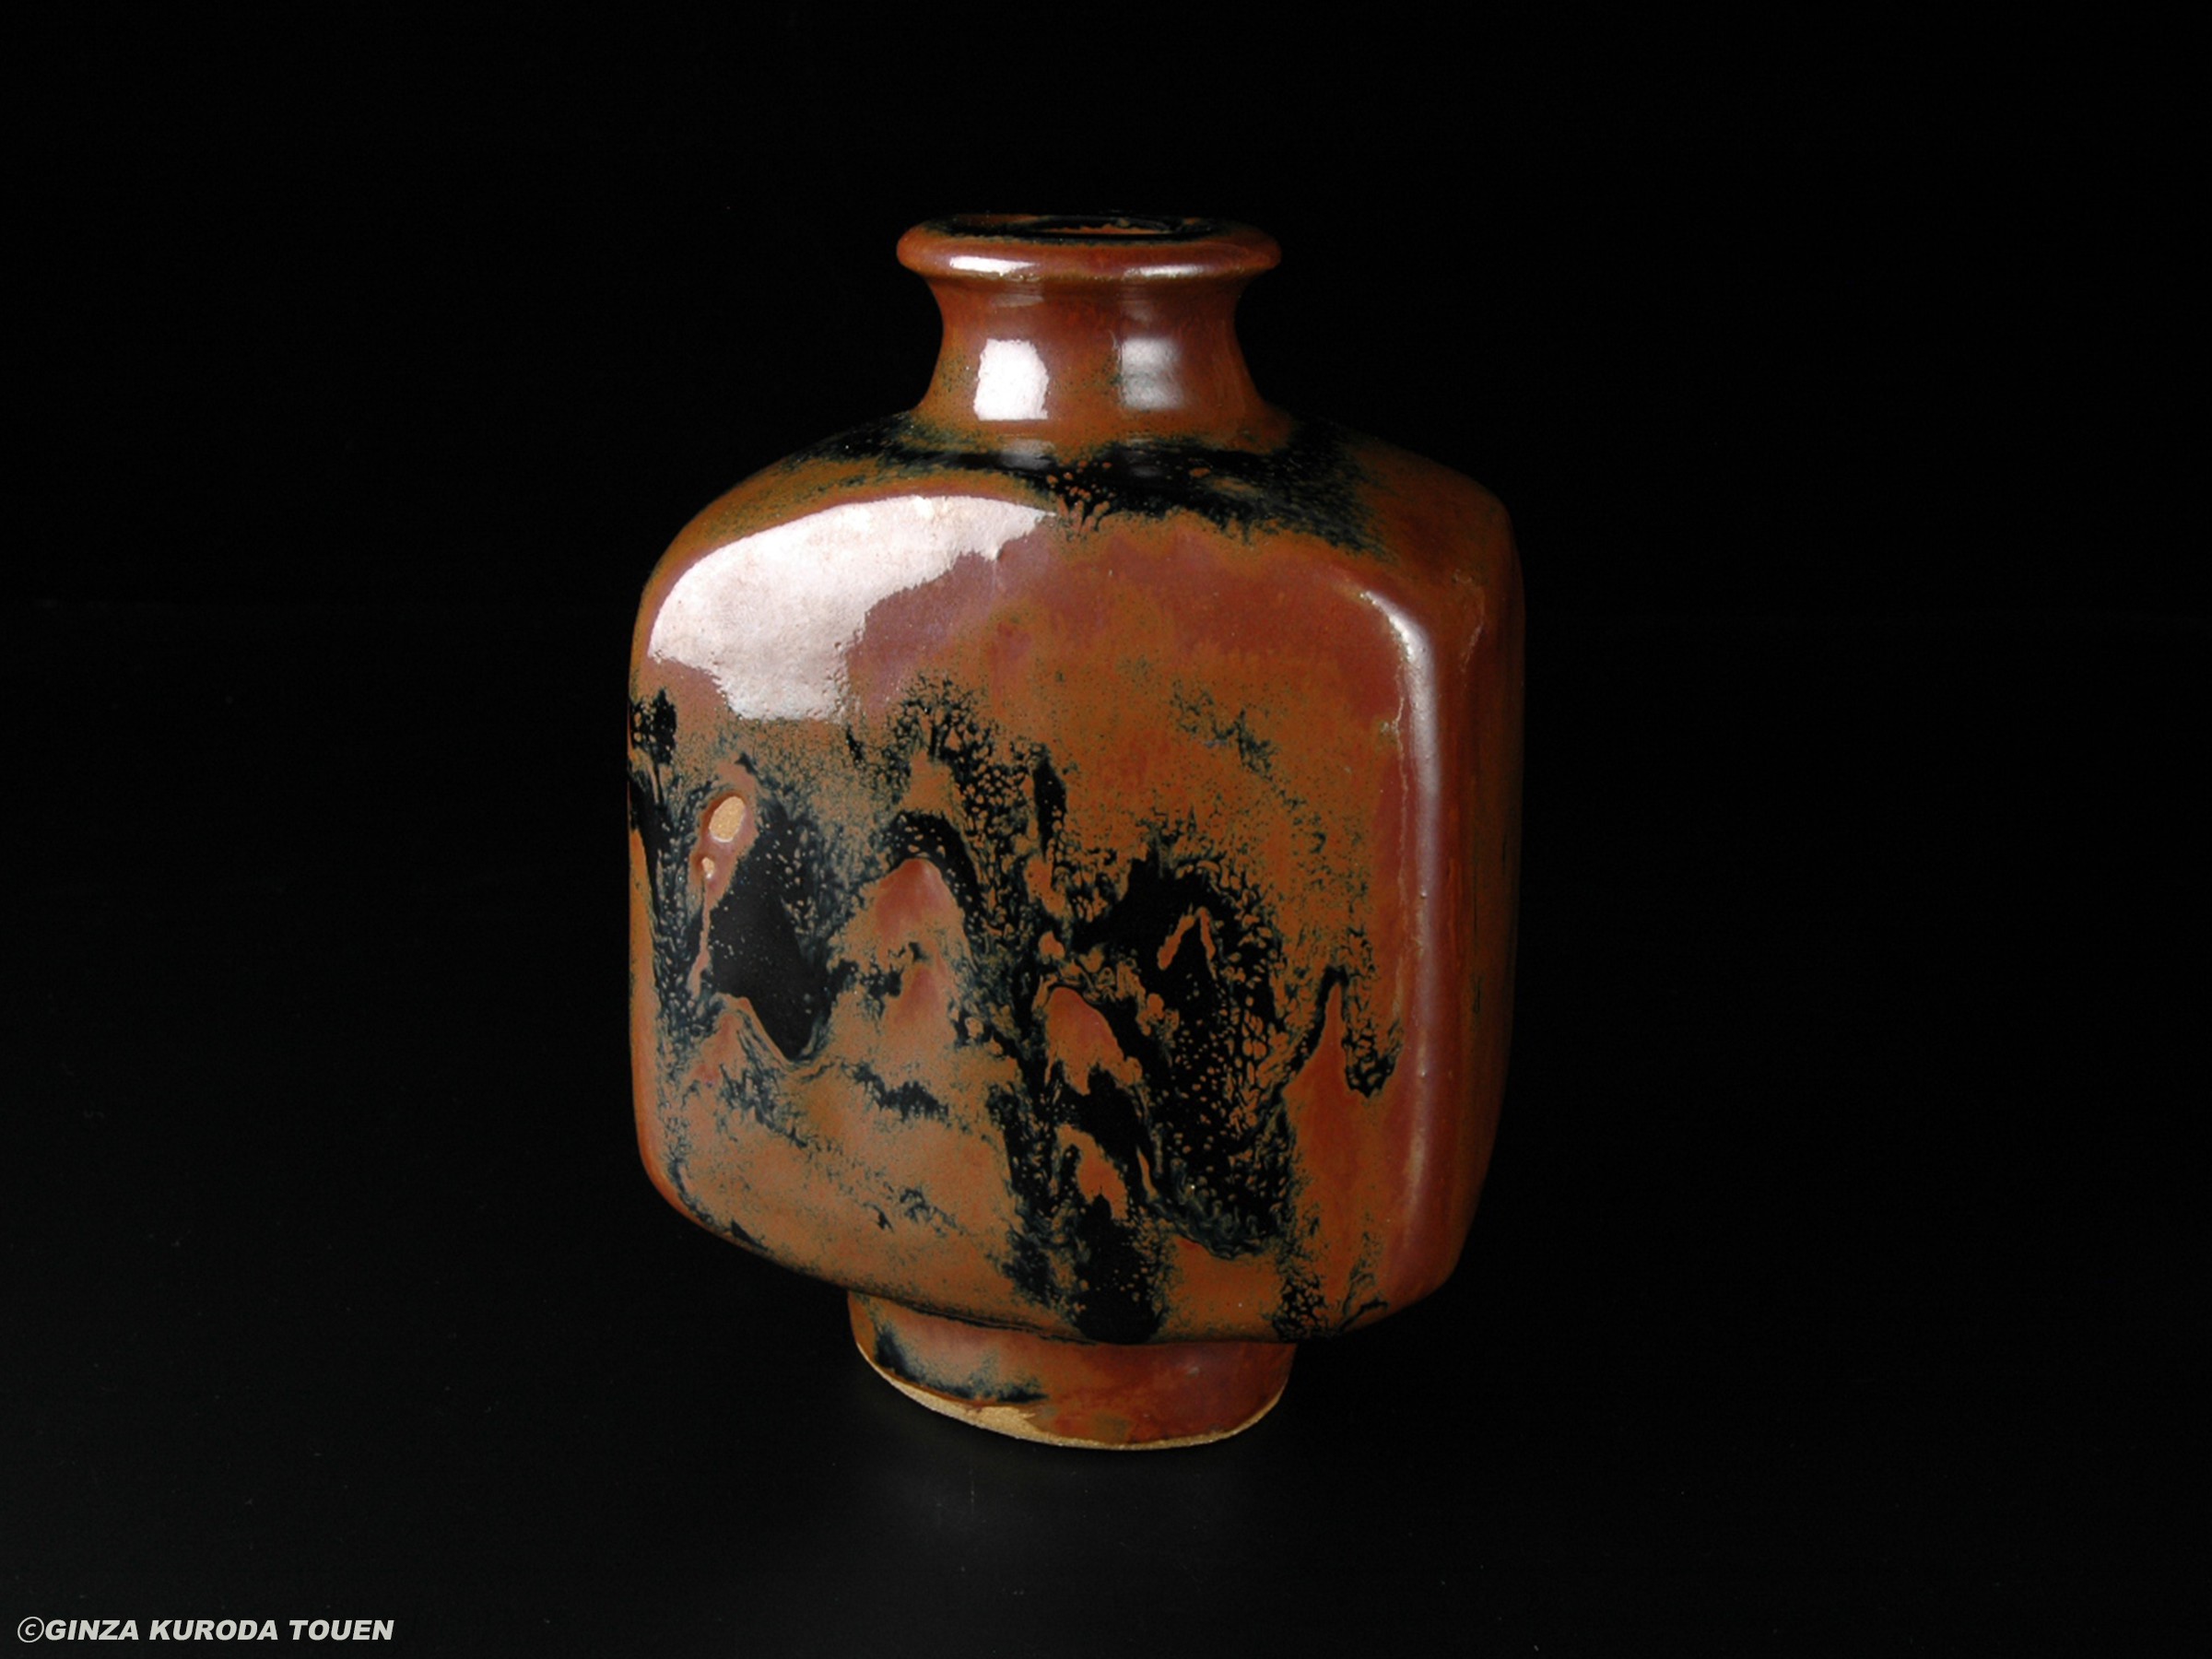 Bernard Leach: Flat vase, Iron glaze